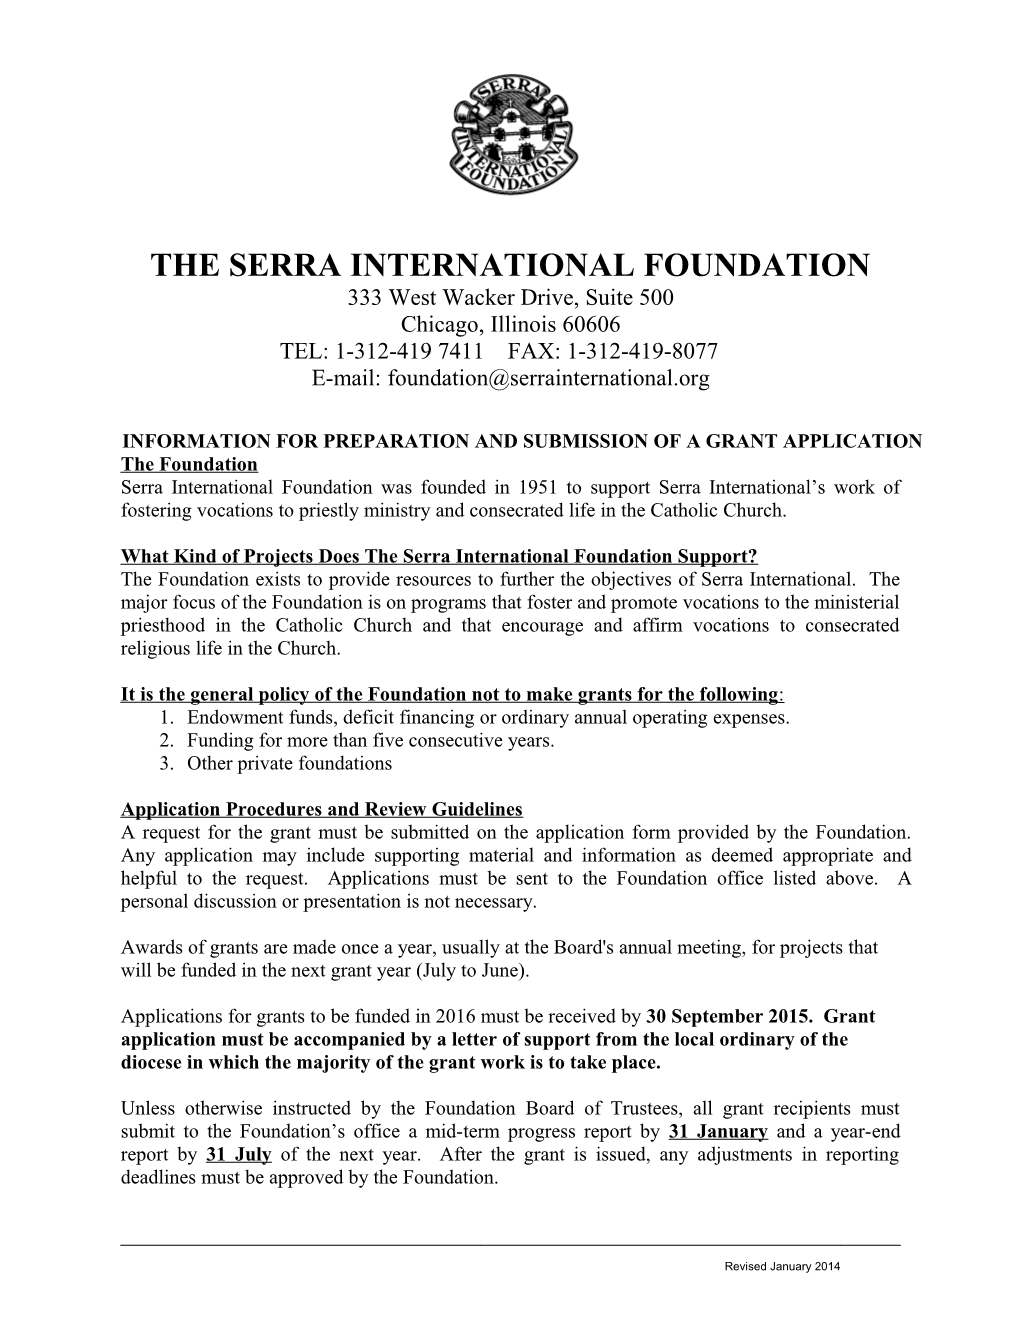 The Serra International Foundation